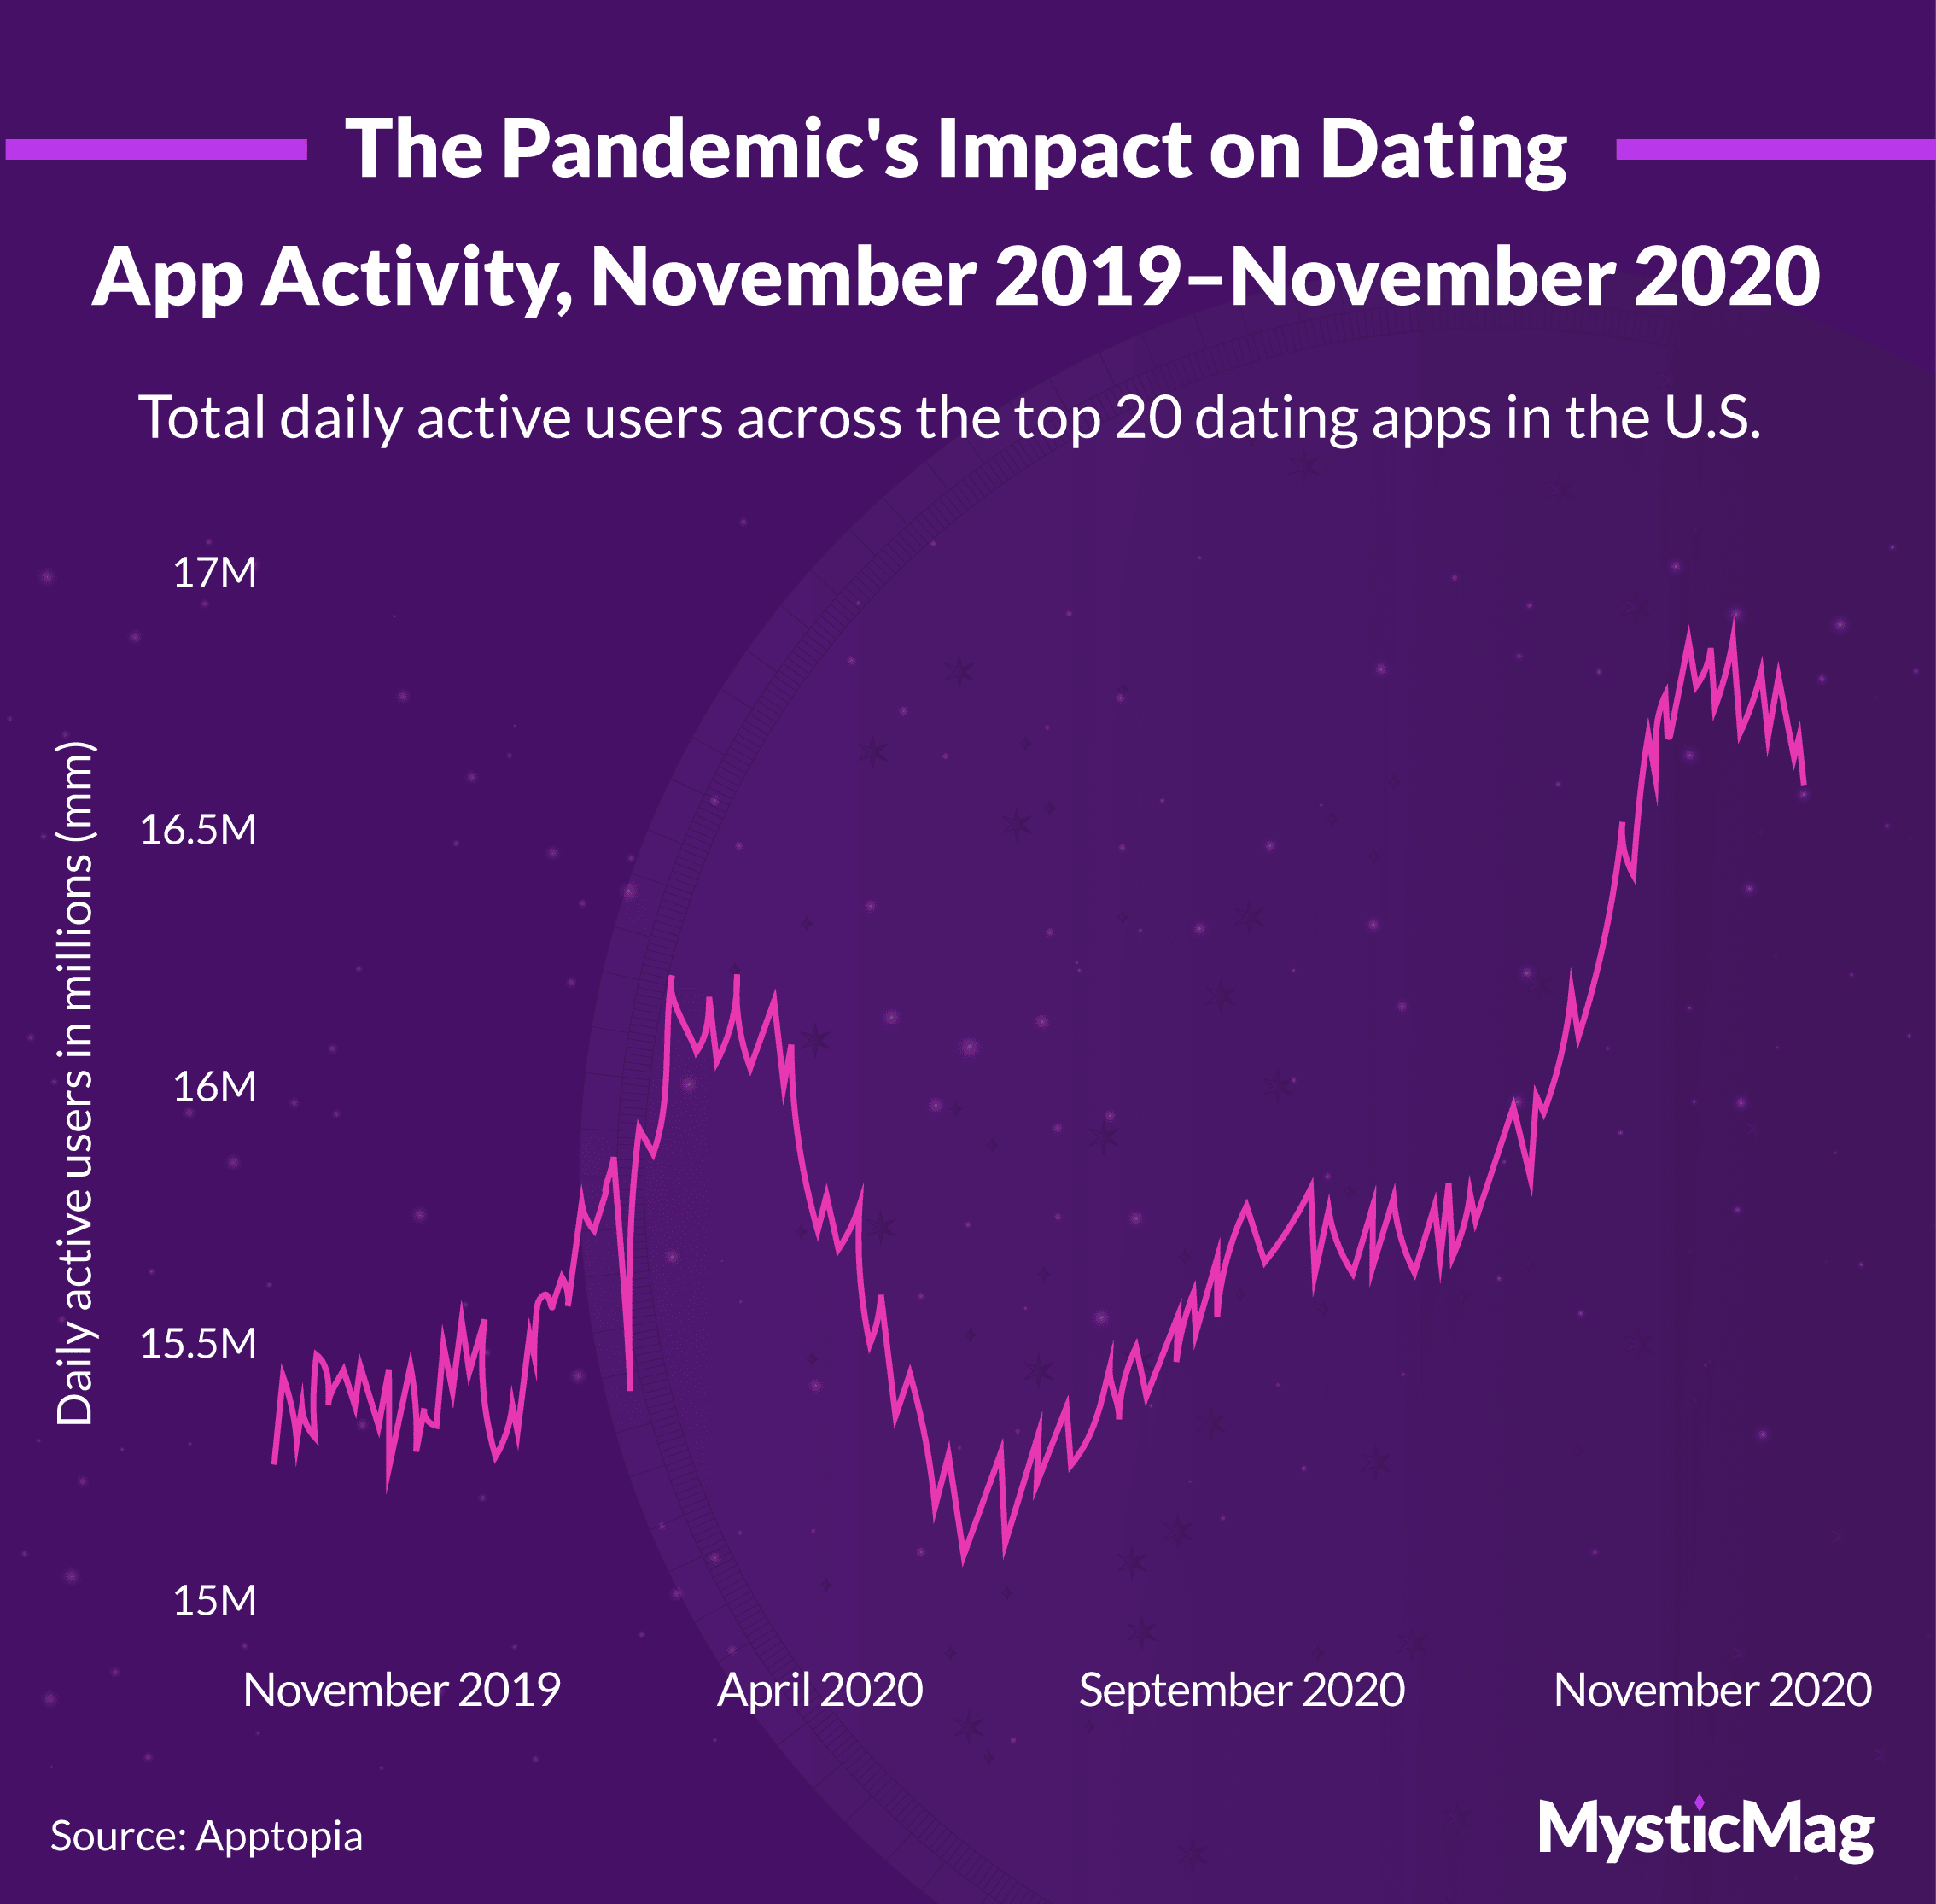 Total daily active dating app users, November 2019-November 2020